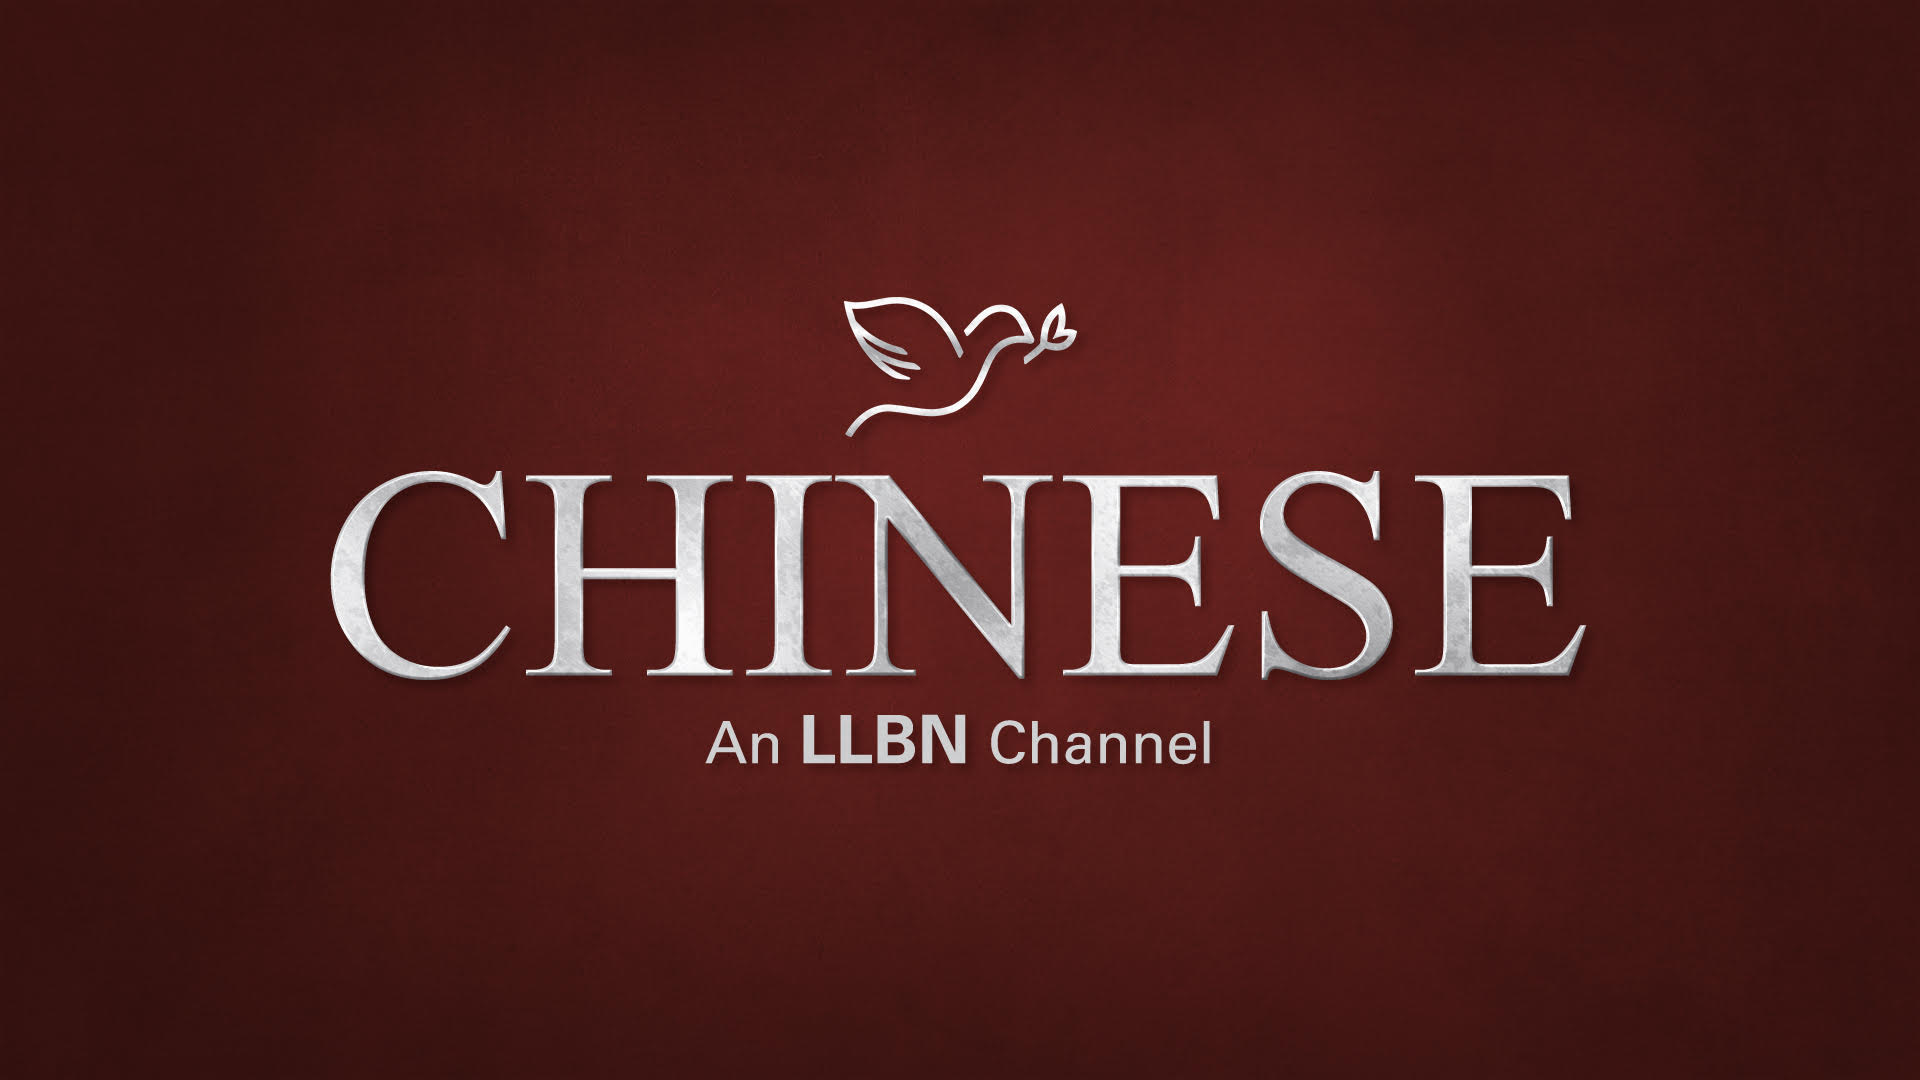 LLBN Chinese Christian TV